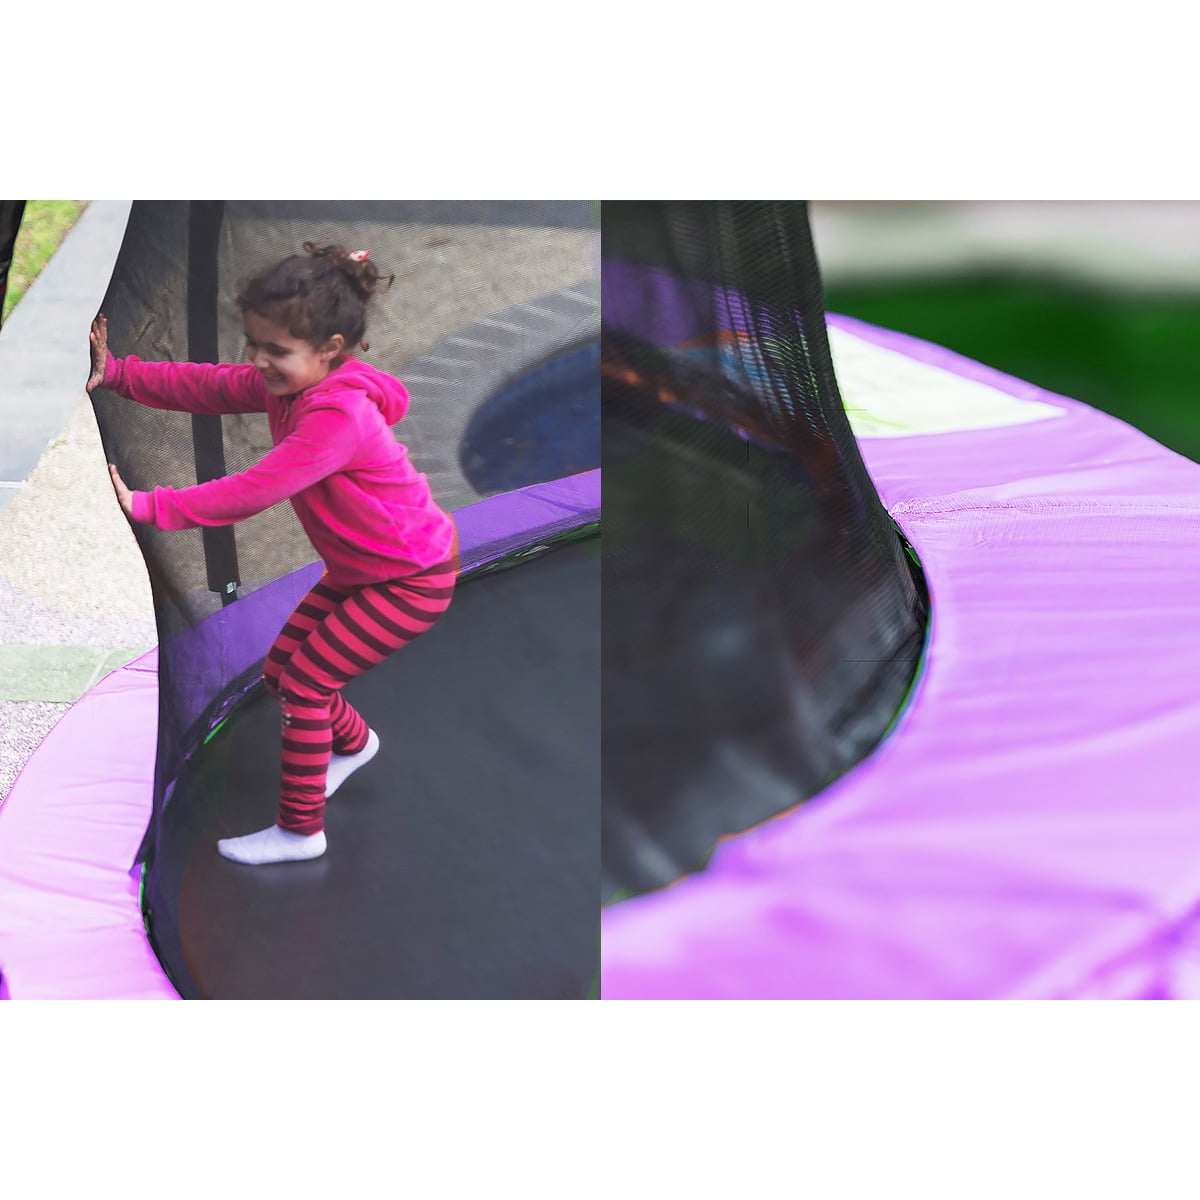 Kahuna 14ft Outdoor Trampoline Kids Children With Safety Enclosure Pad Mat Ladder Basketball Hoop Set - Purple